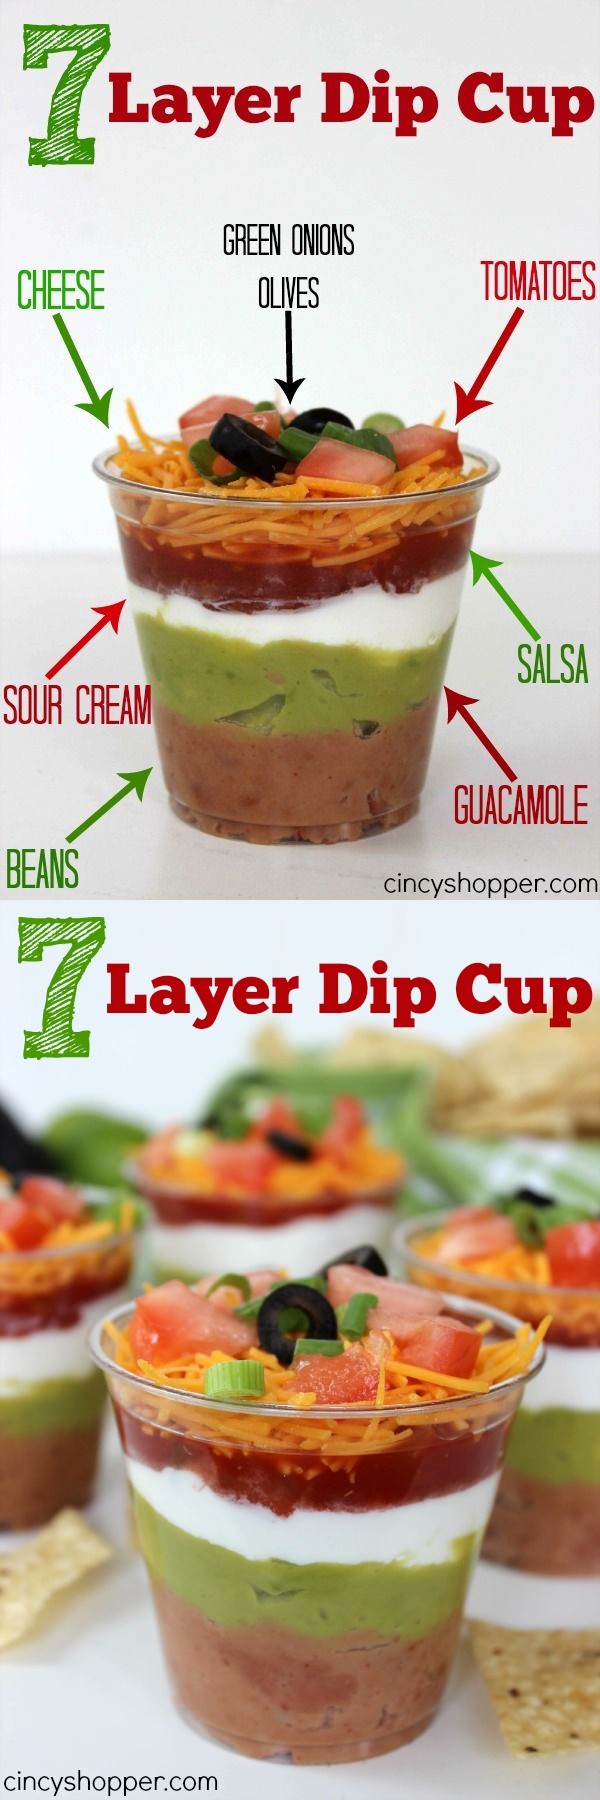 7 Layer Dip Cup